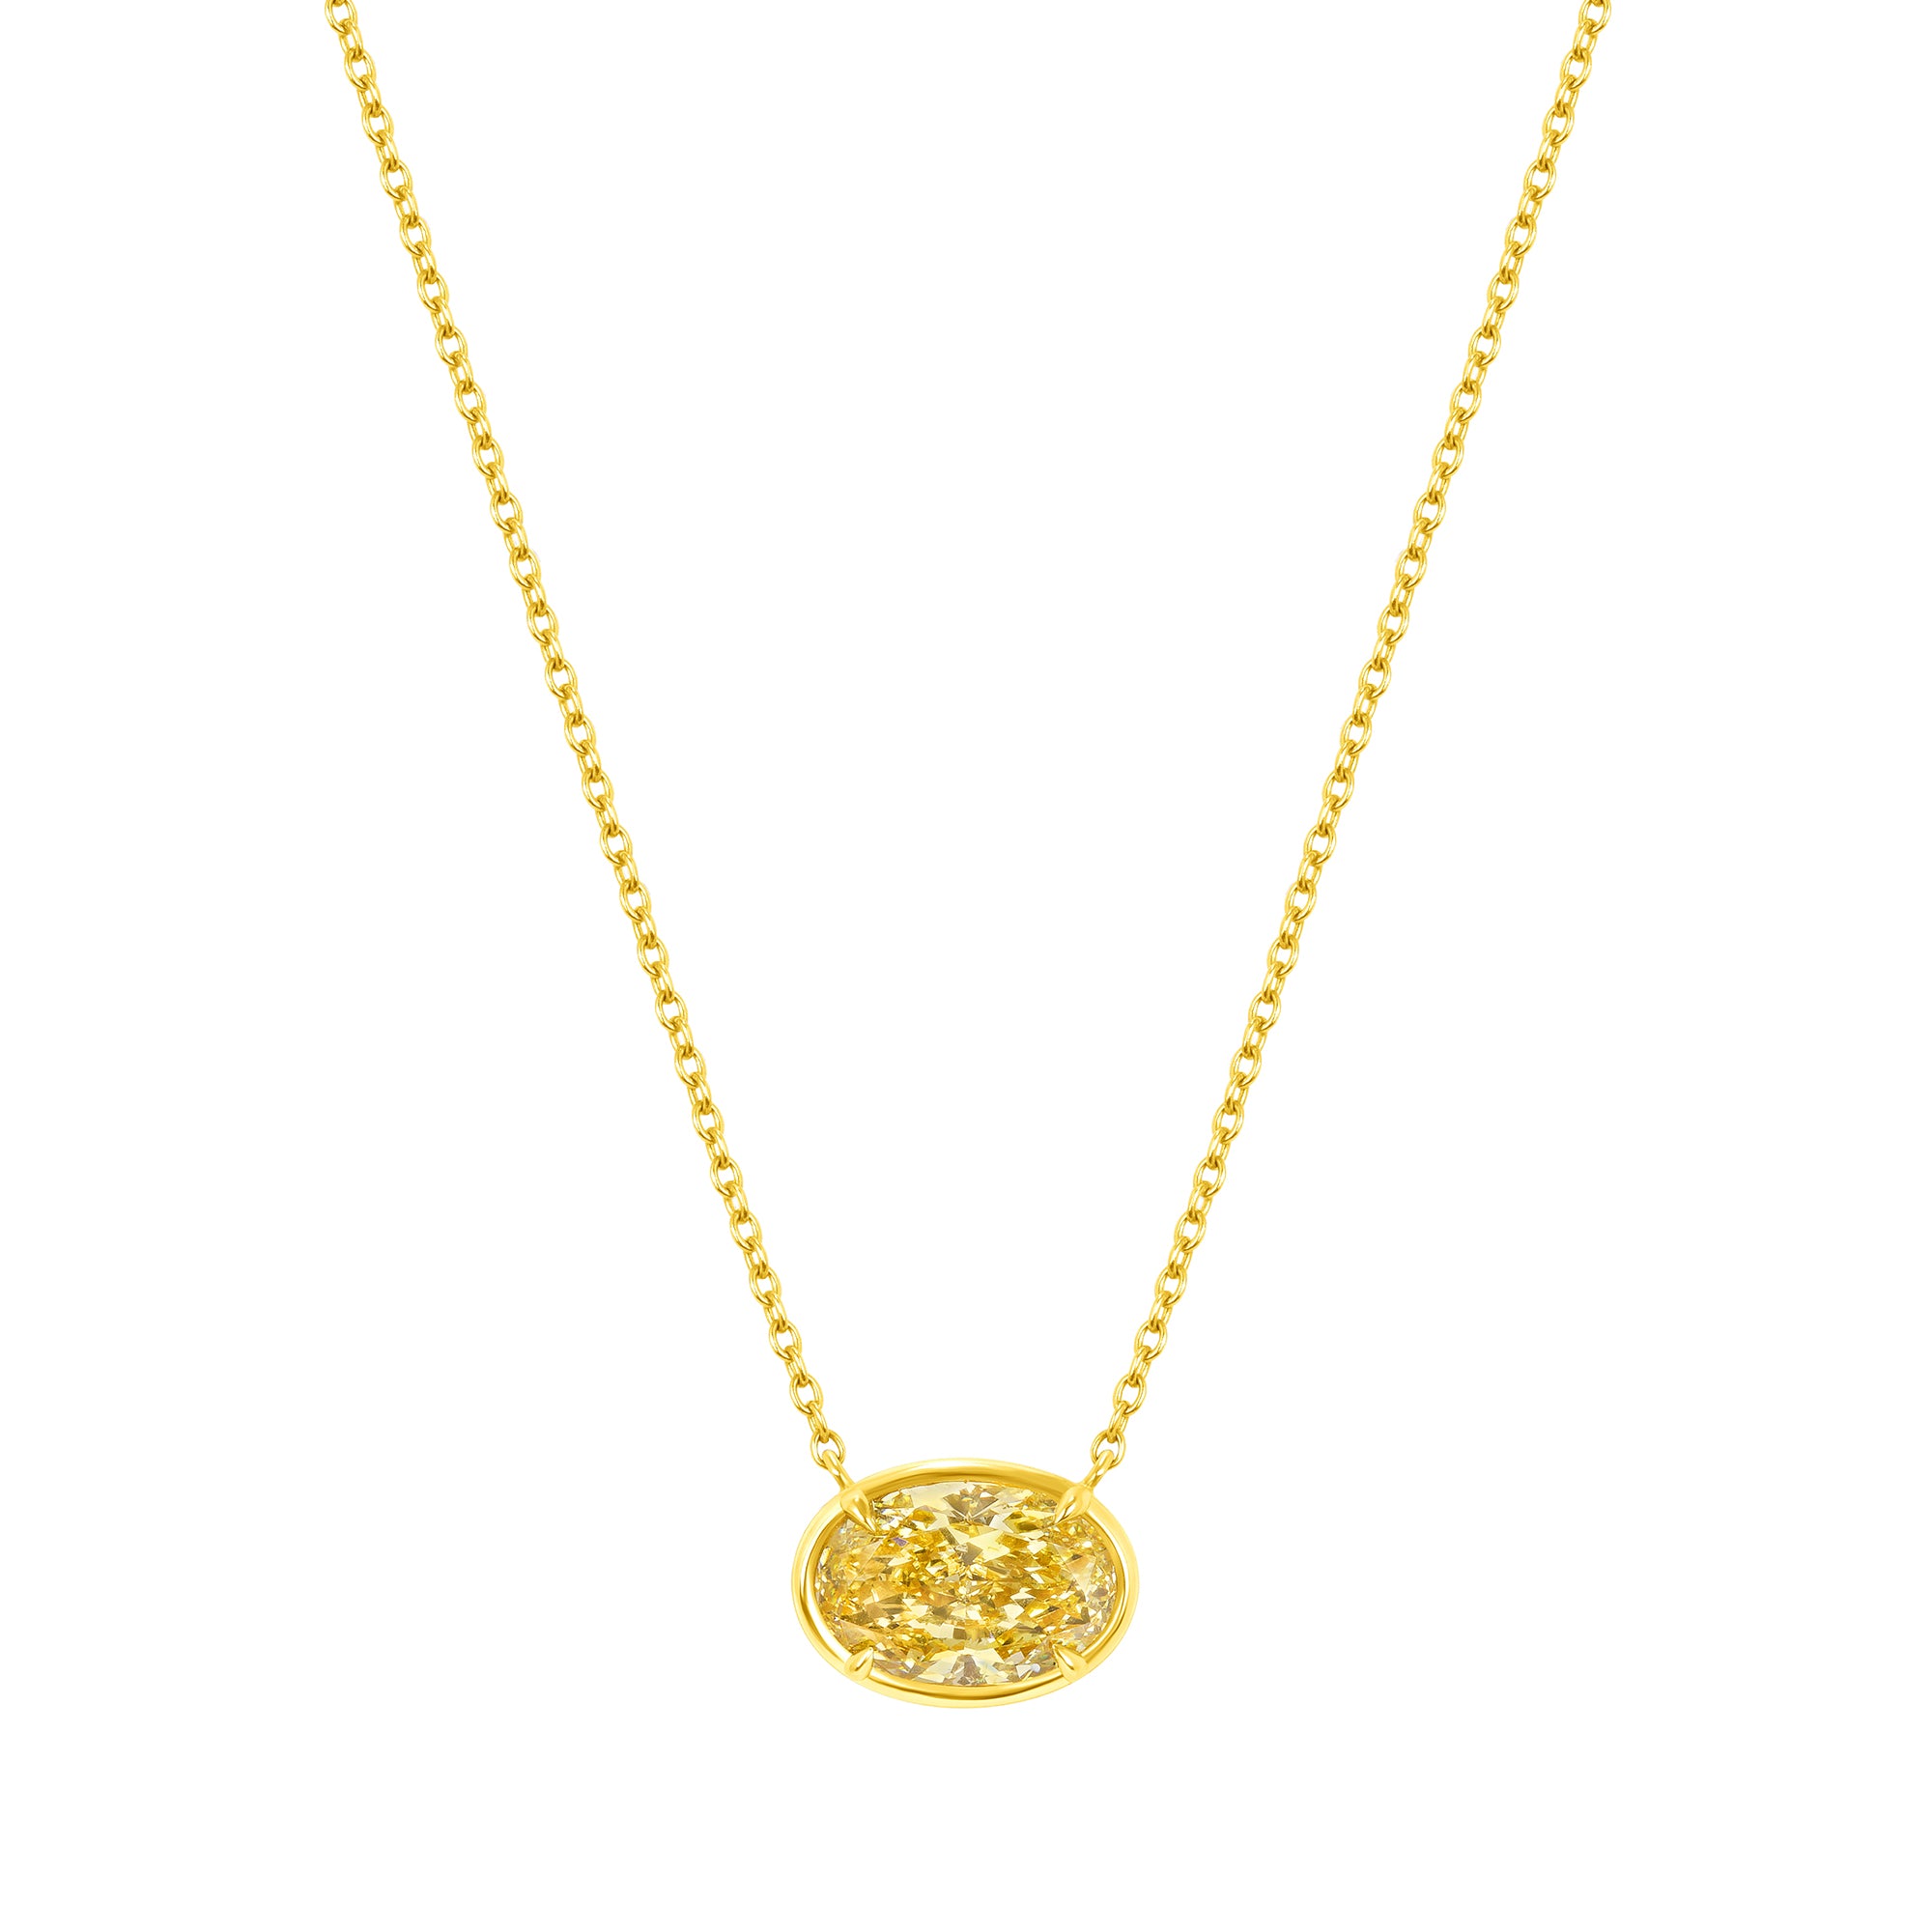 Oval Cut Fancy Light Yellow Diamond Necklace in 18 Karat Yellow Gold